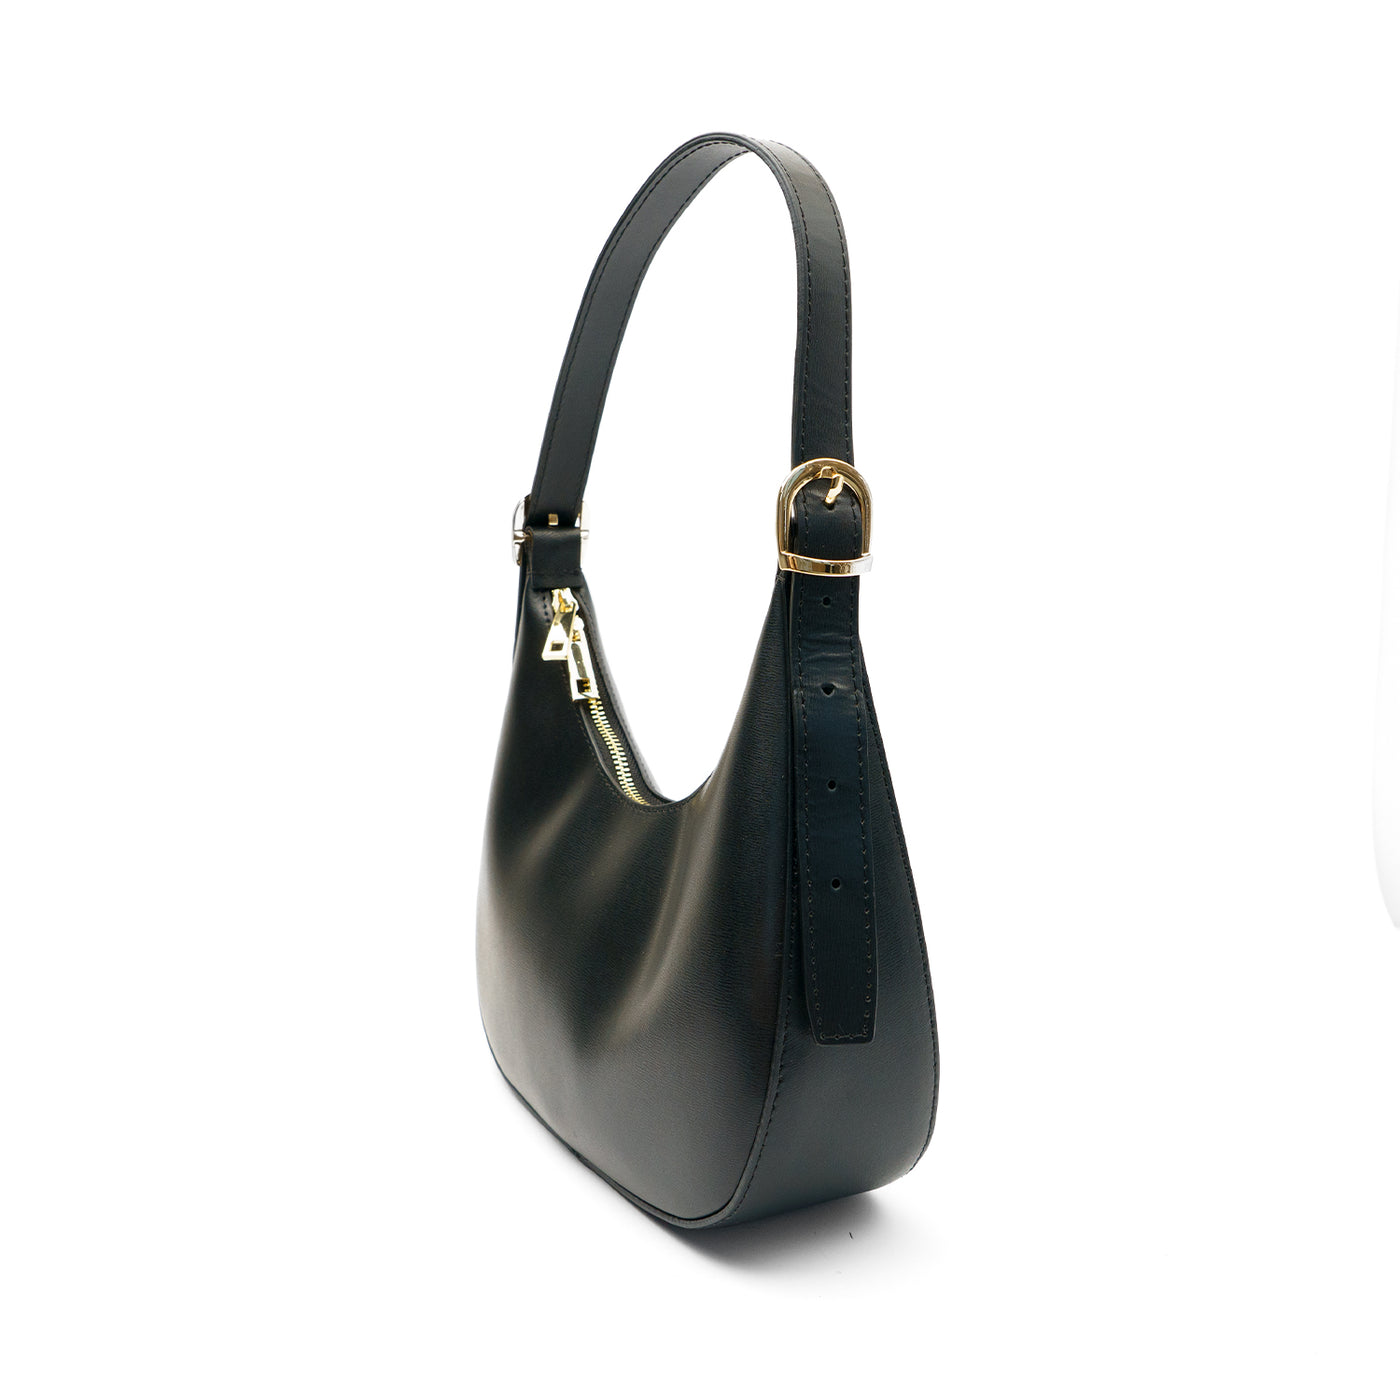 Leather bag "Savona" in saffiano leather, Black